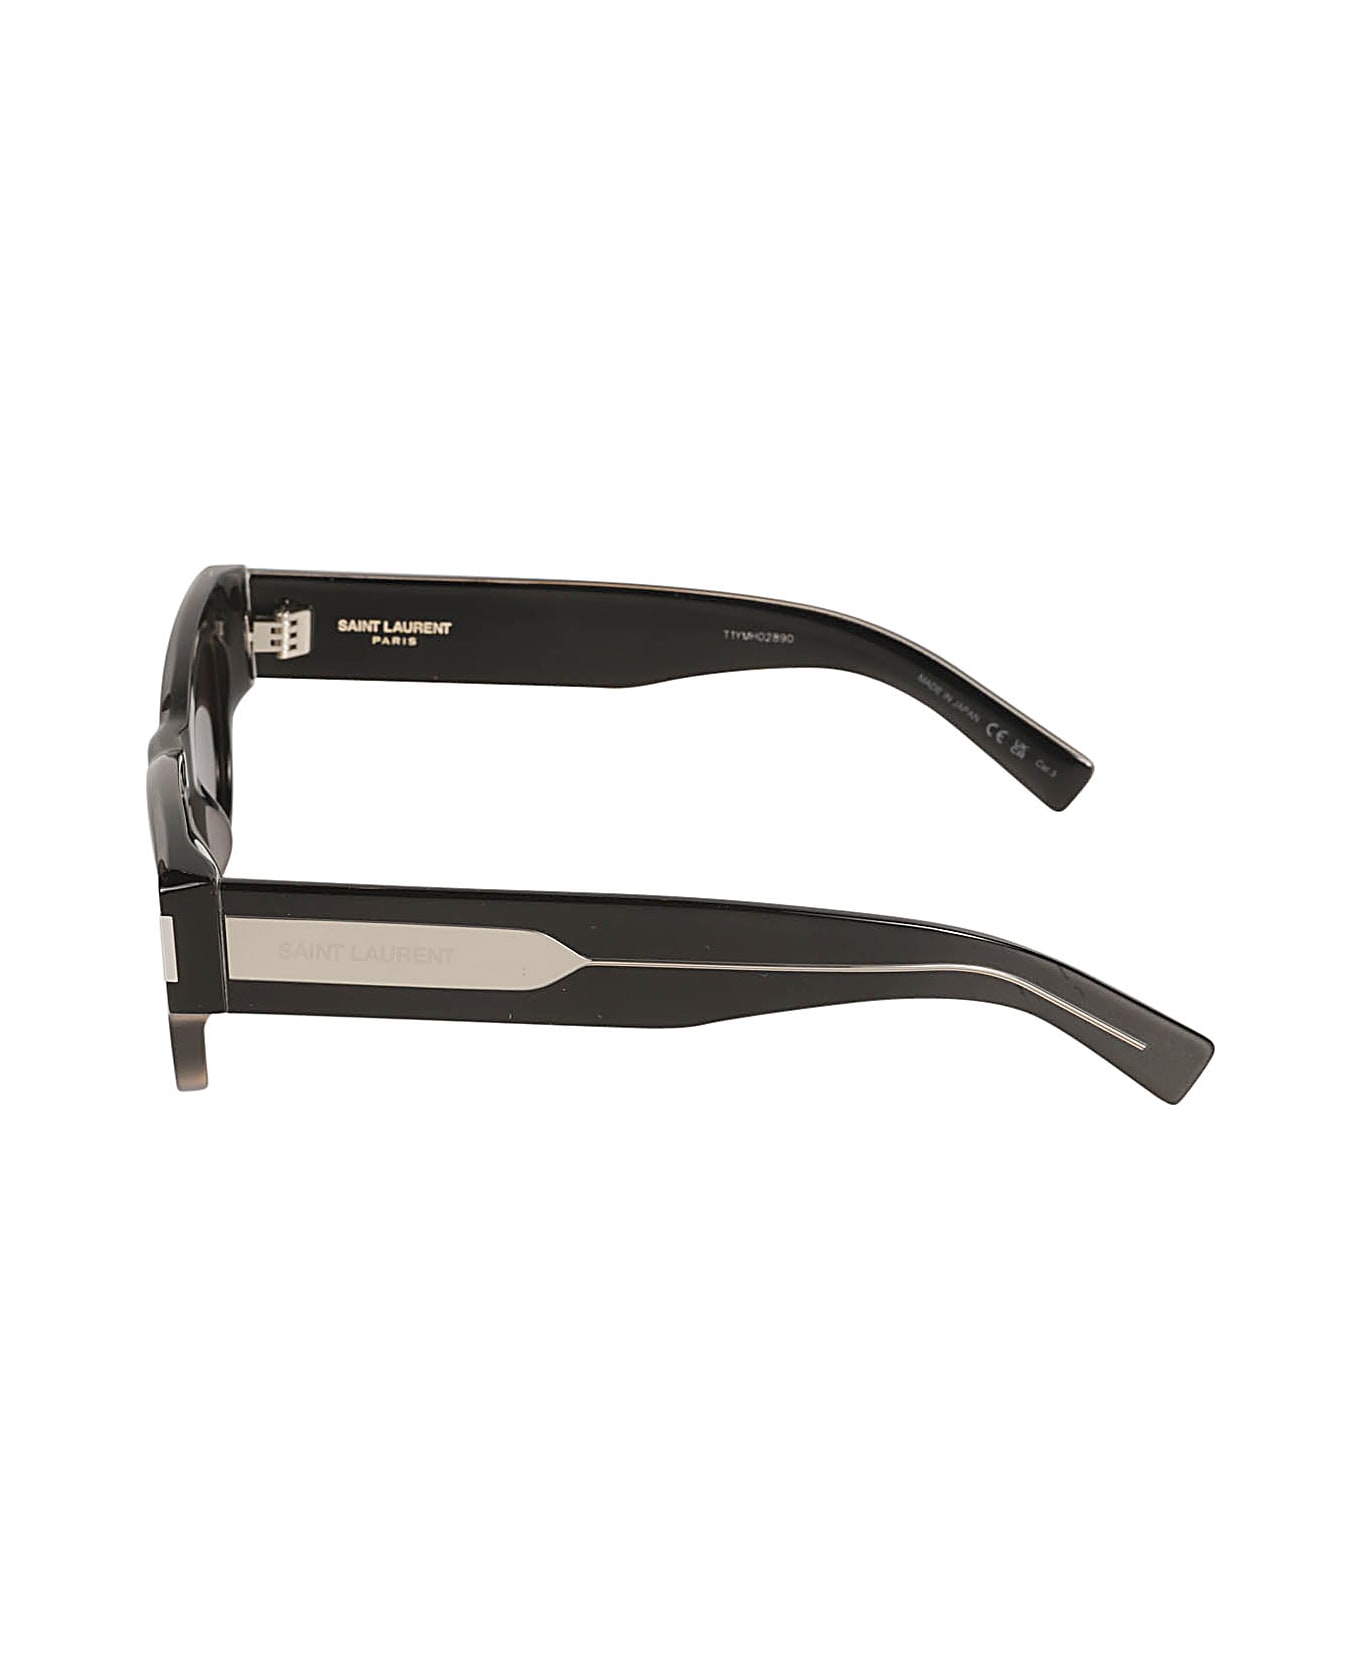 Saint Laurent Eyewear Round Frame Sunglasses Alican - Black/Crystal/Grey